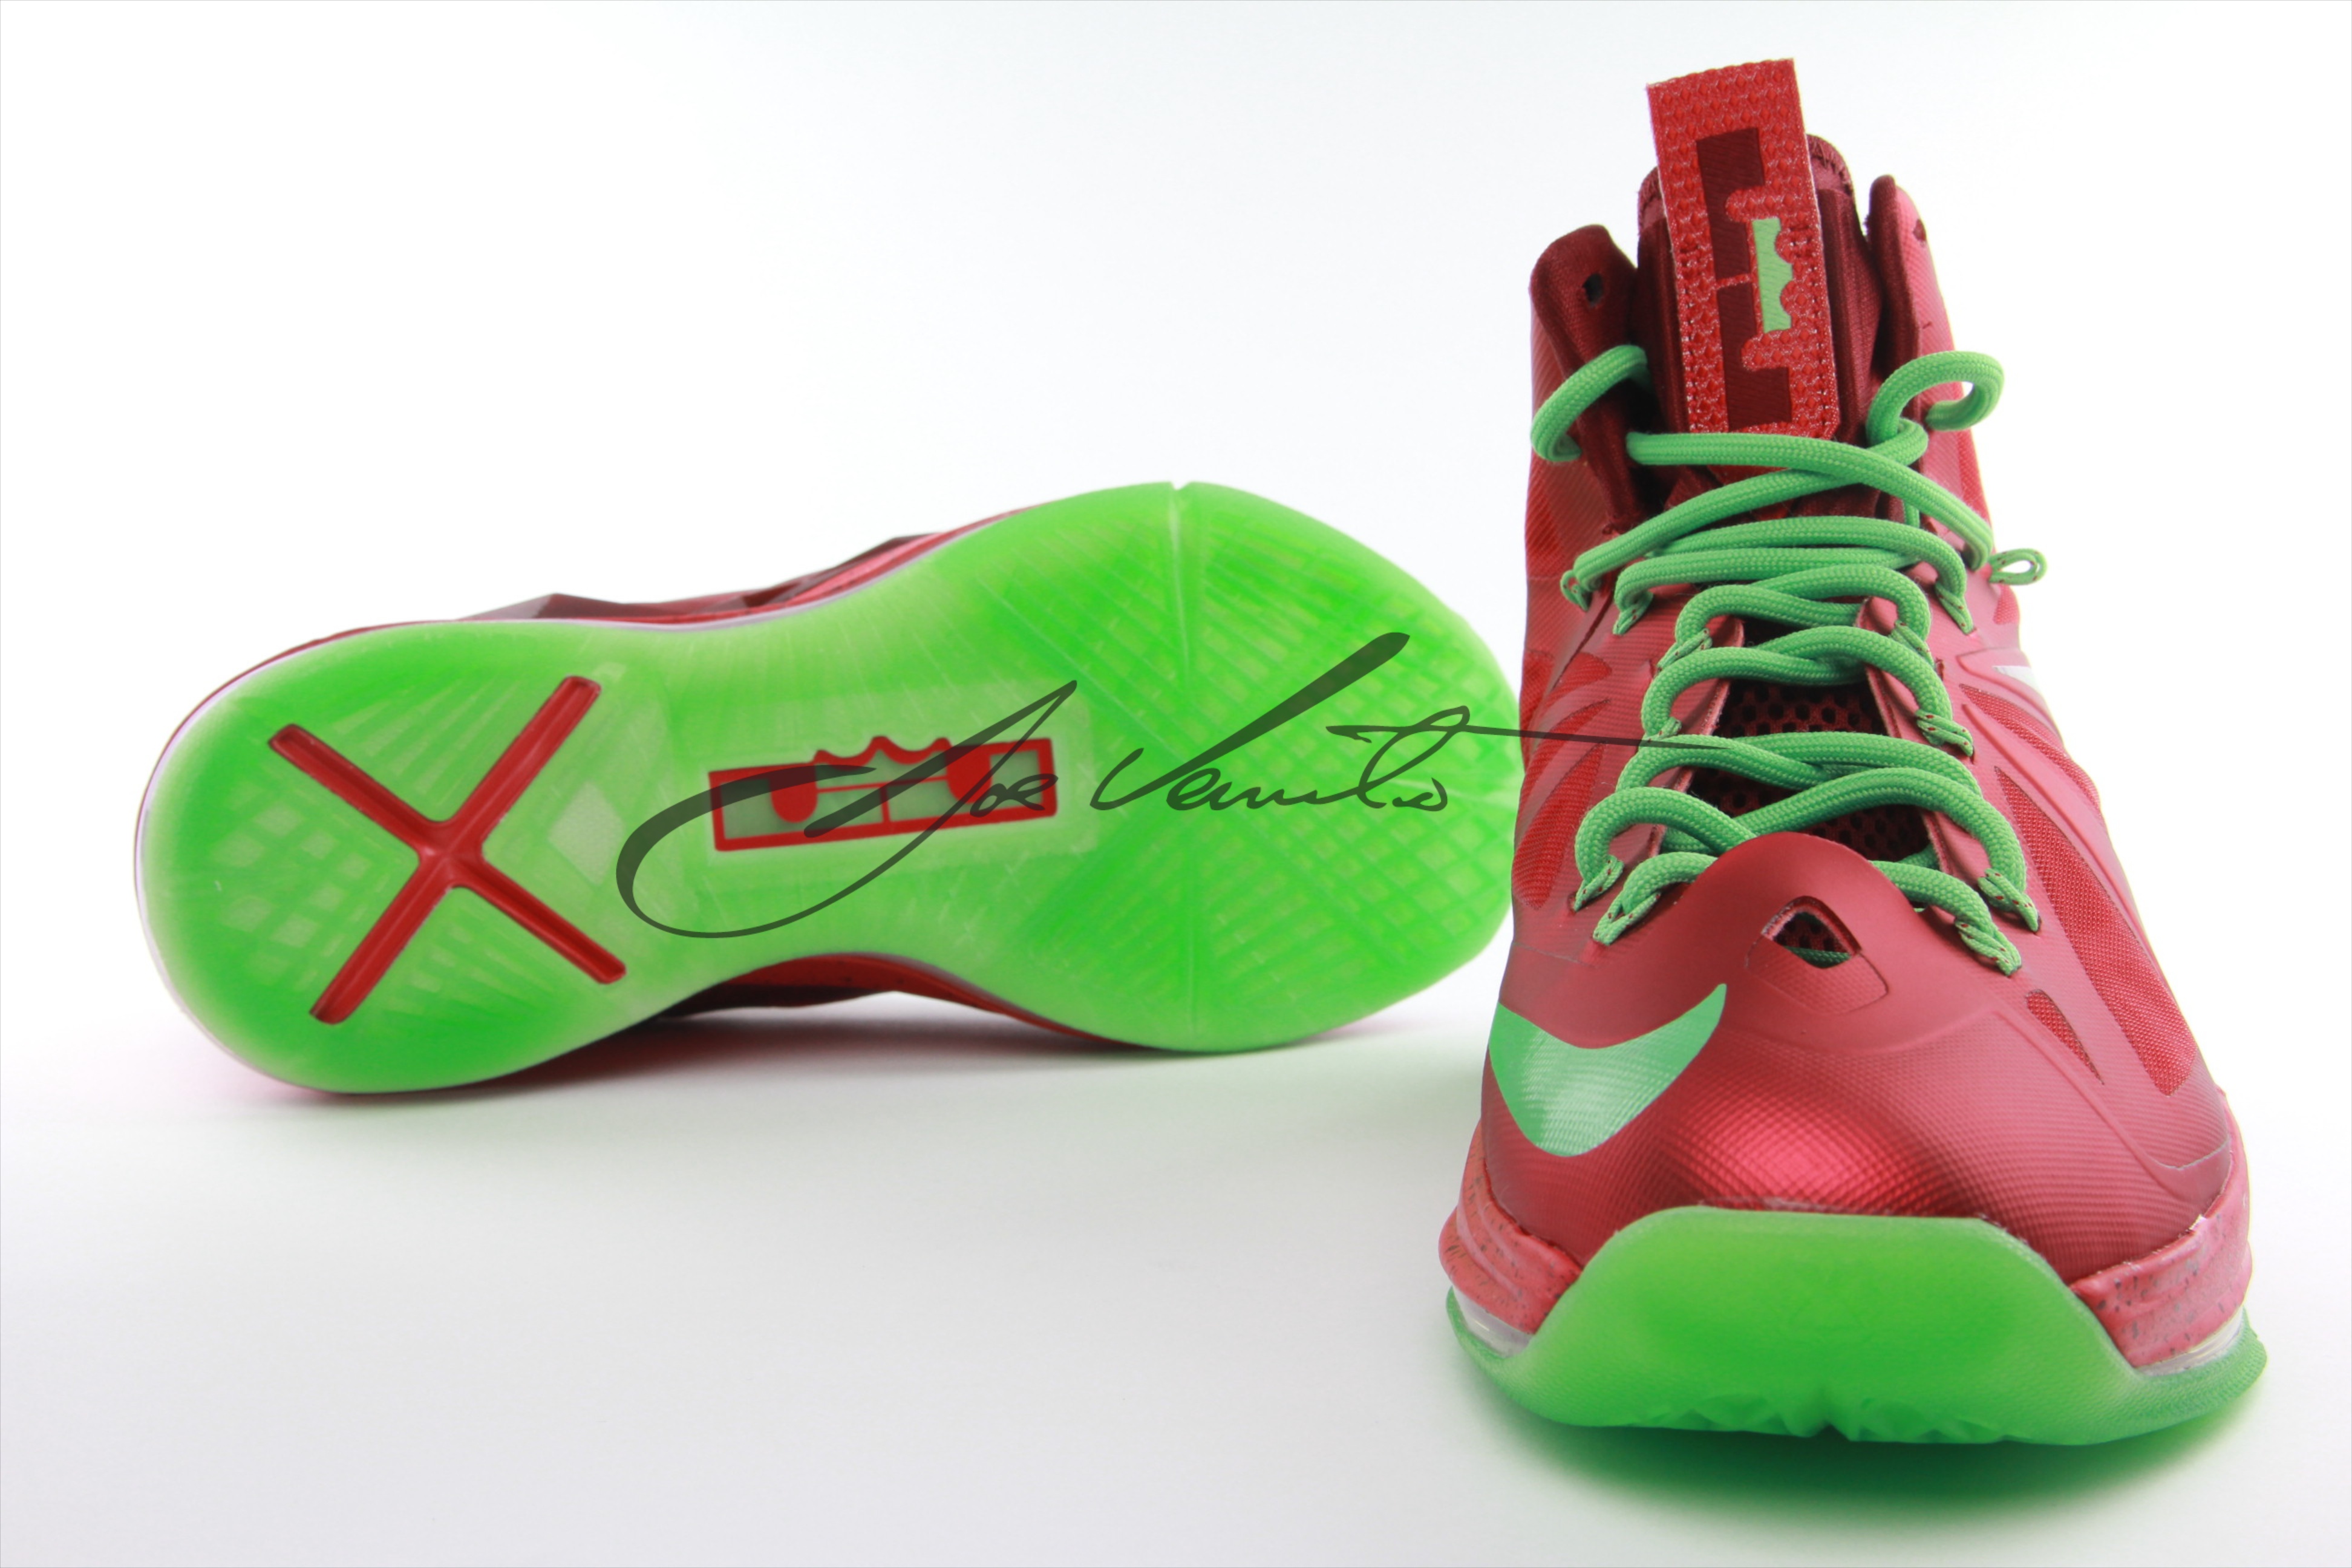 Nike LeBron X (10) ‘Christmas’ – New Images